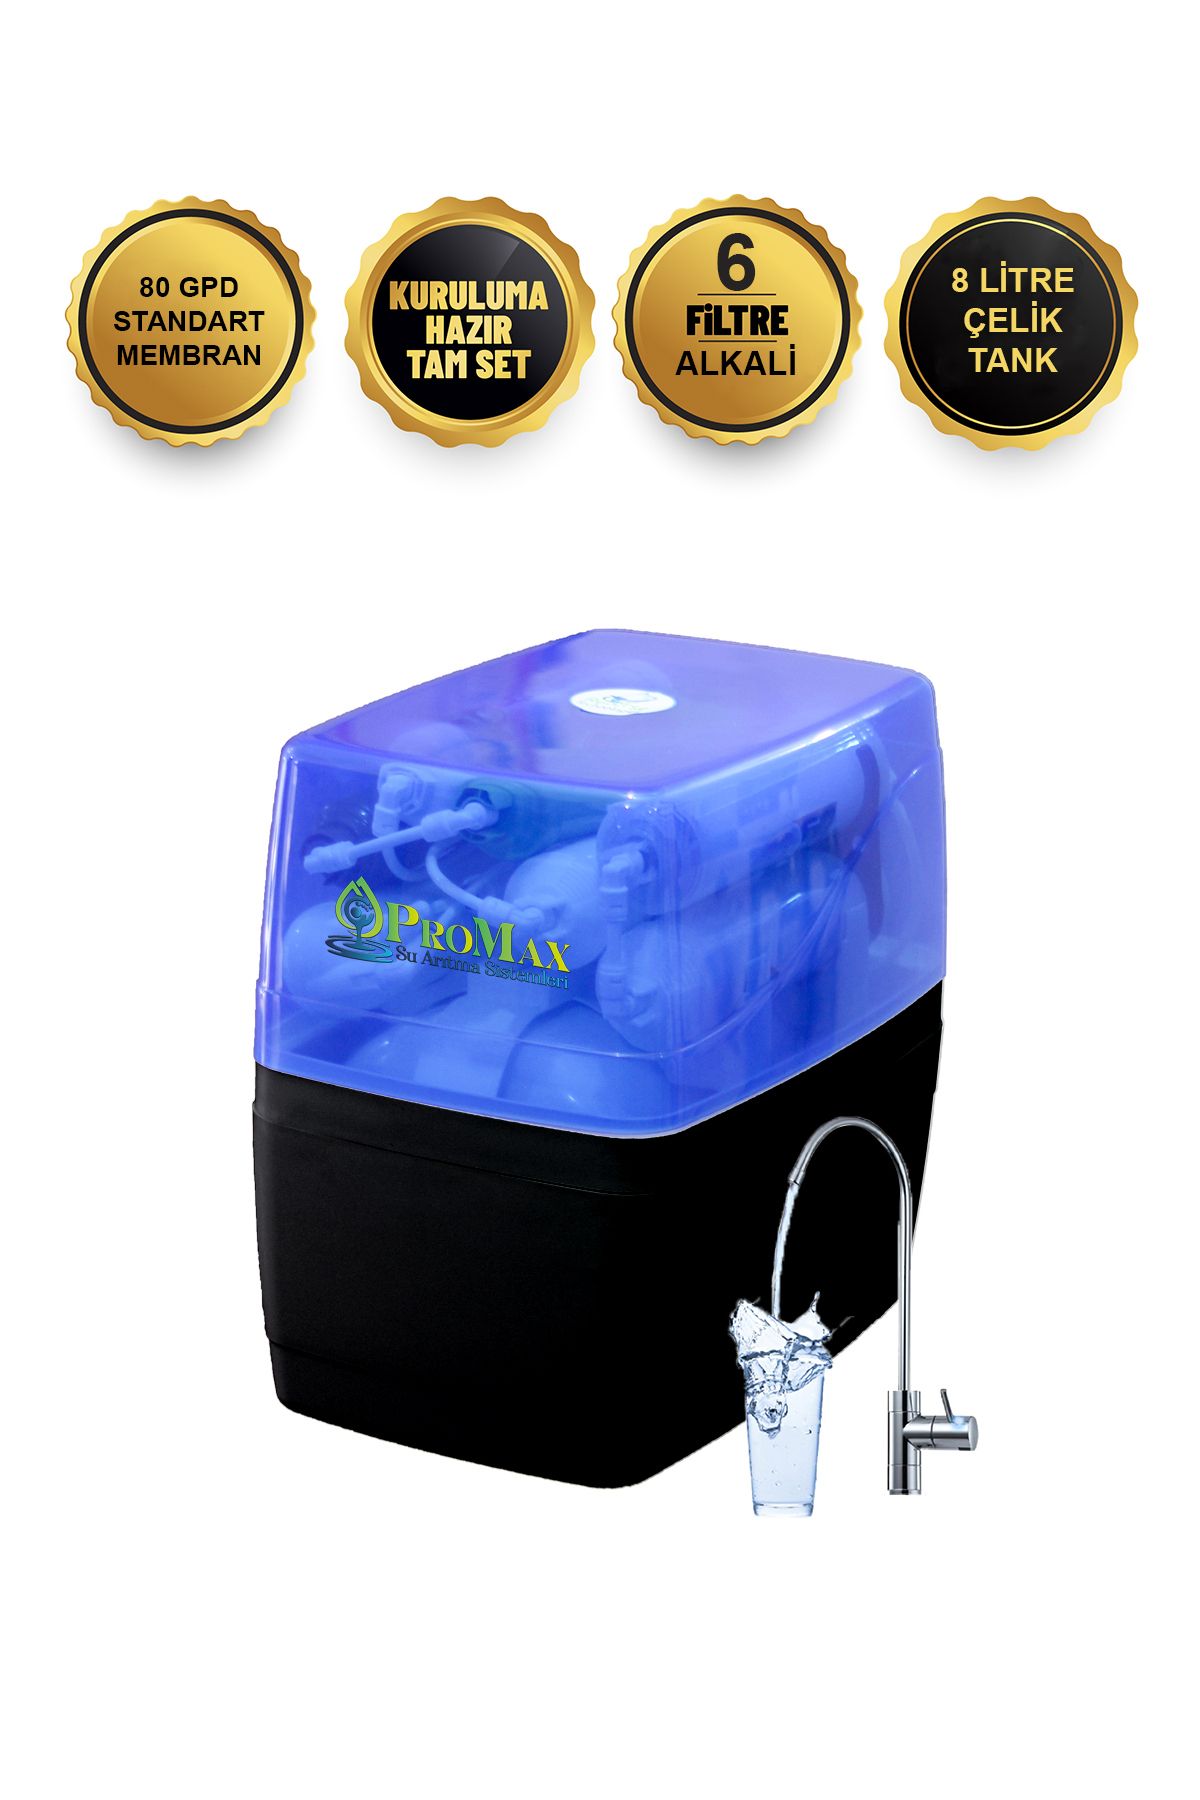 Promax 11 Aşamalı Alkali & Çelik Tanklı Su Arıtma Cihazı